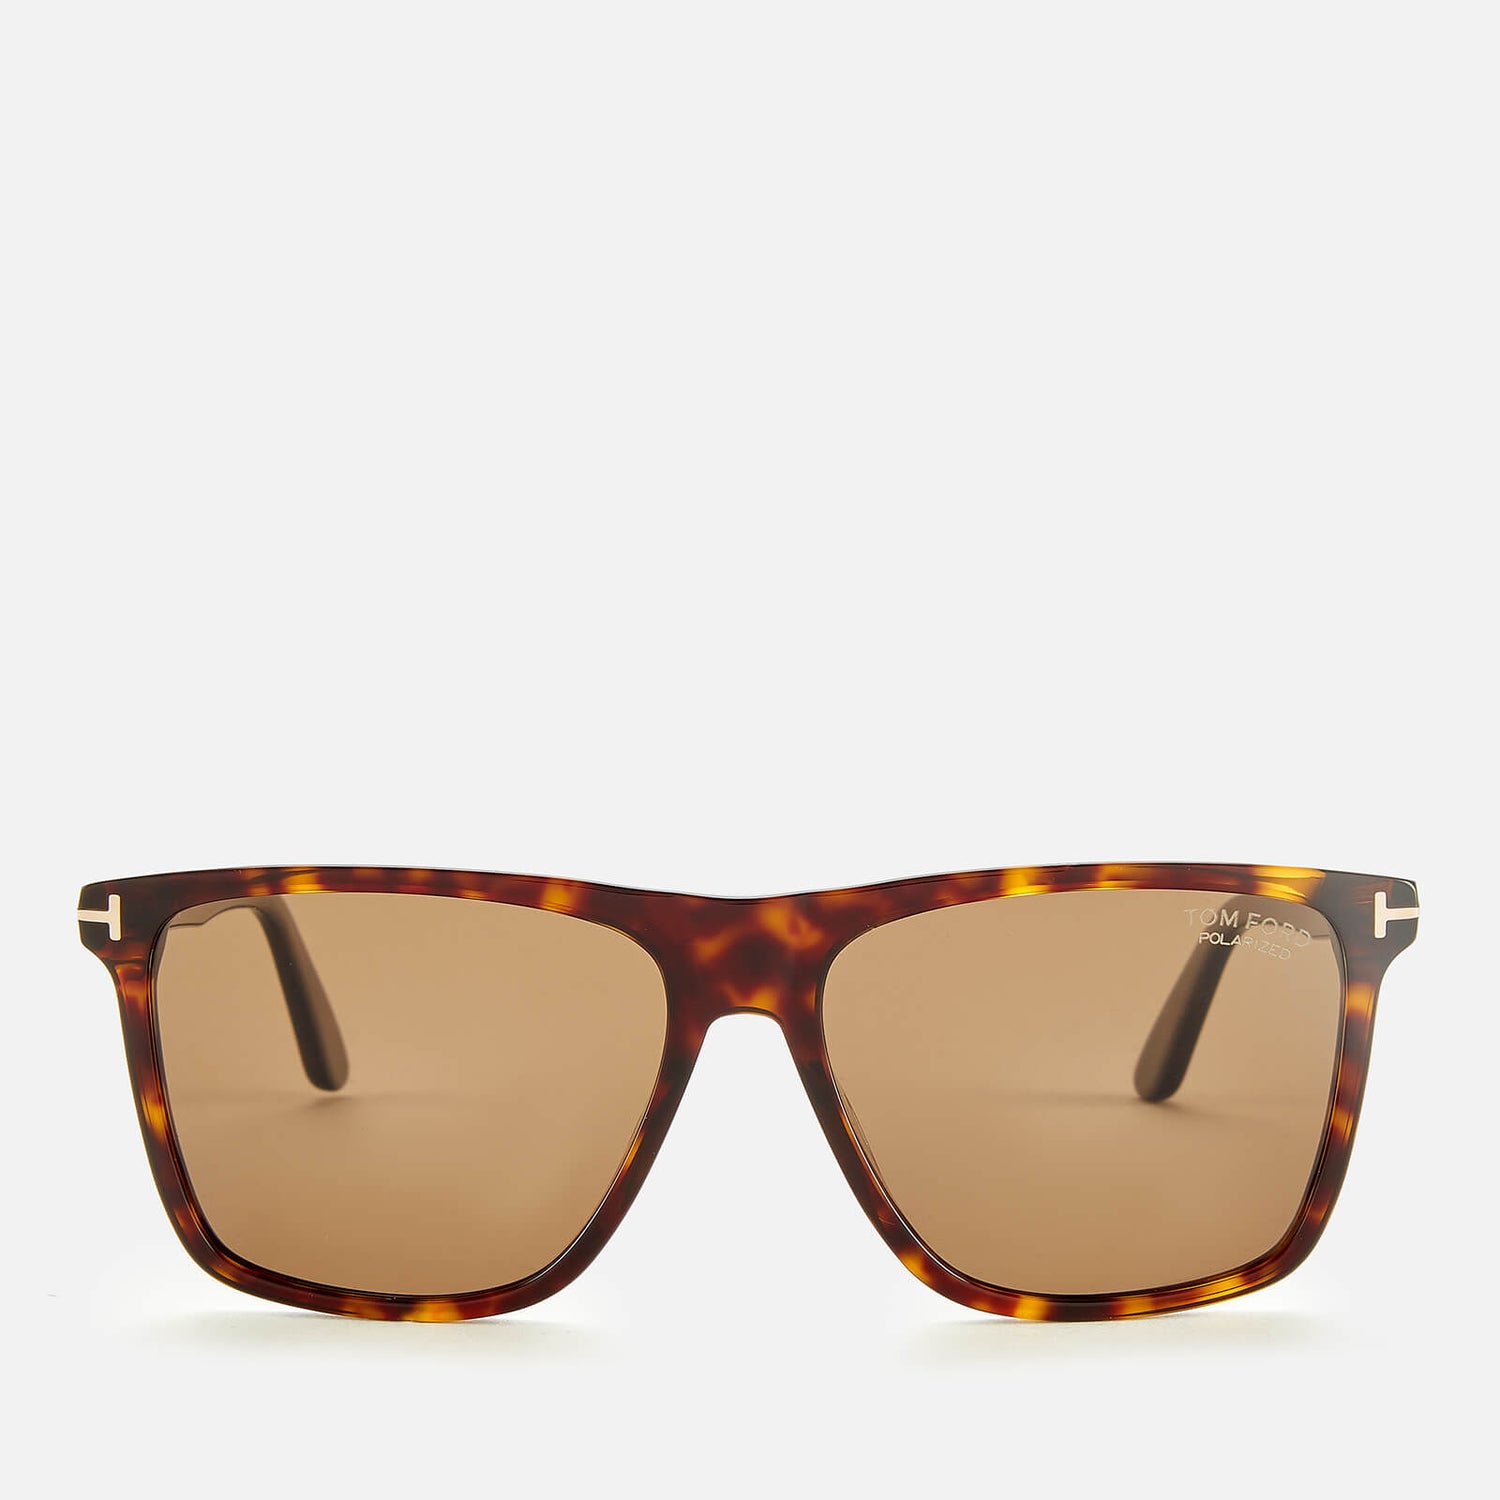 Tom Ford Men's Fletcher Sunglasses - Dark Havana